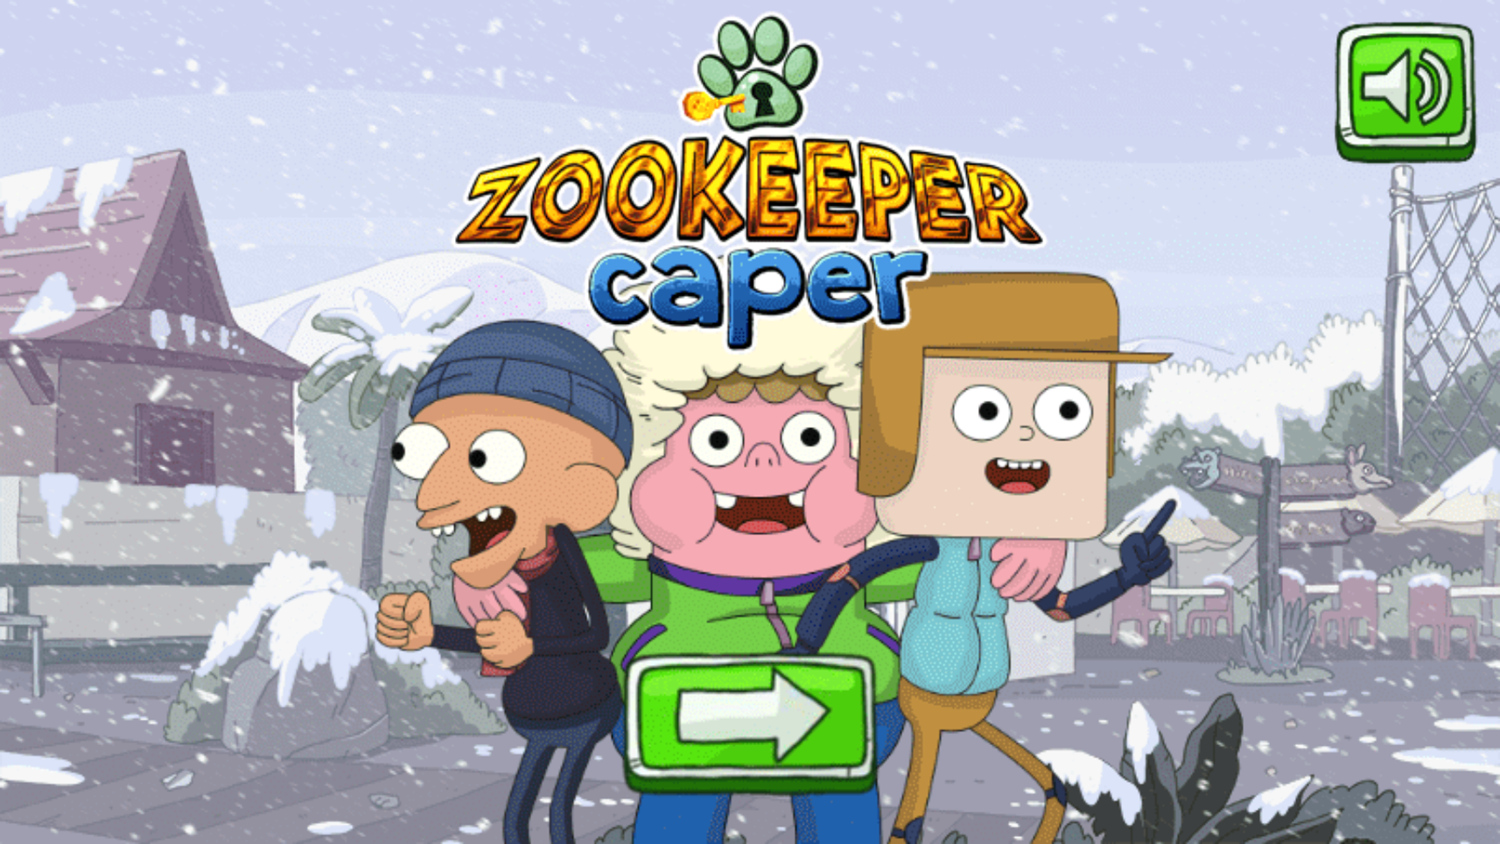 Clarence Zookeeper Caper Game Welcome Screen Screenshot.